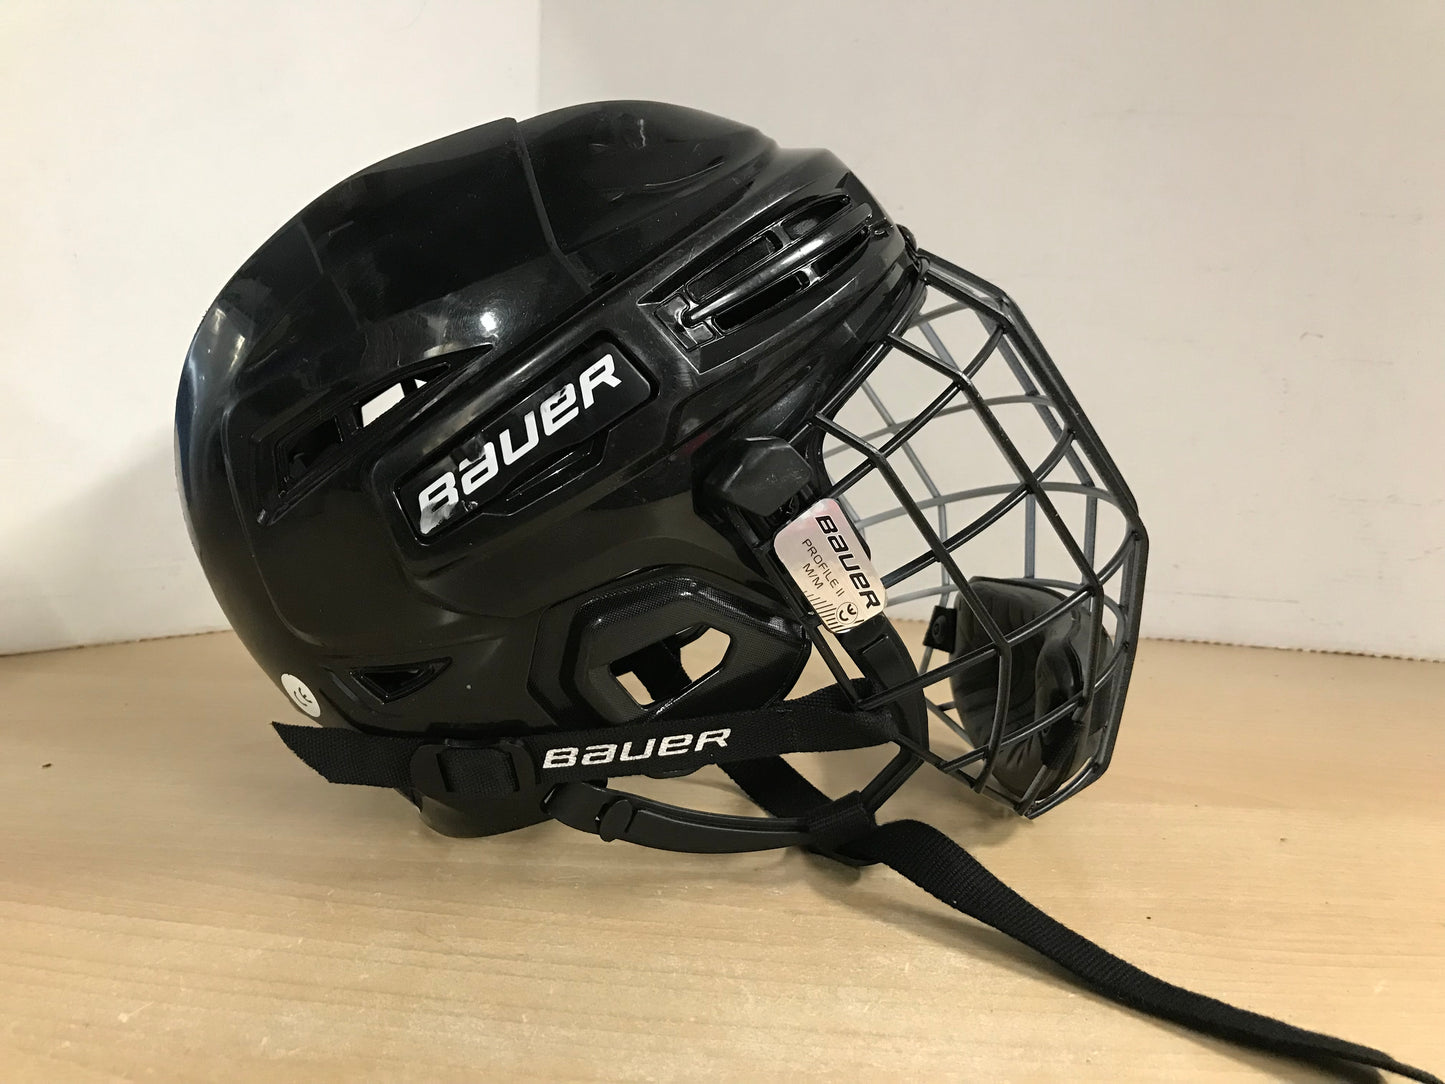 Hockey Helmet Child Size Medium Age 6-8 Bauer IMS5.0 Black With Cage Expires Dec 2025 New Demo Model